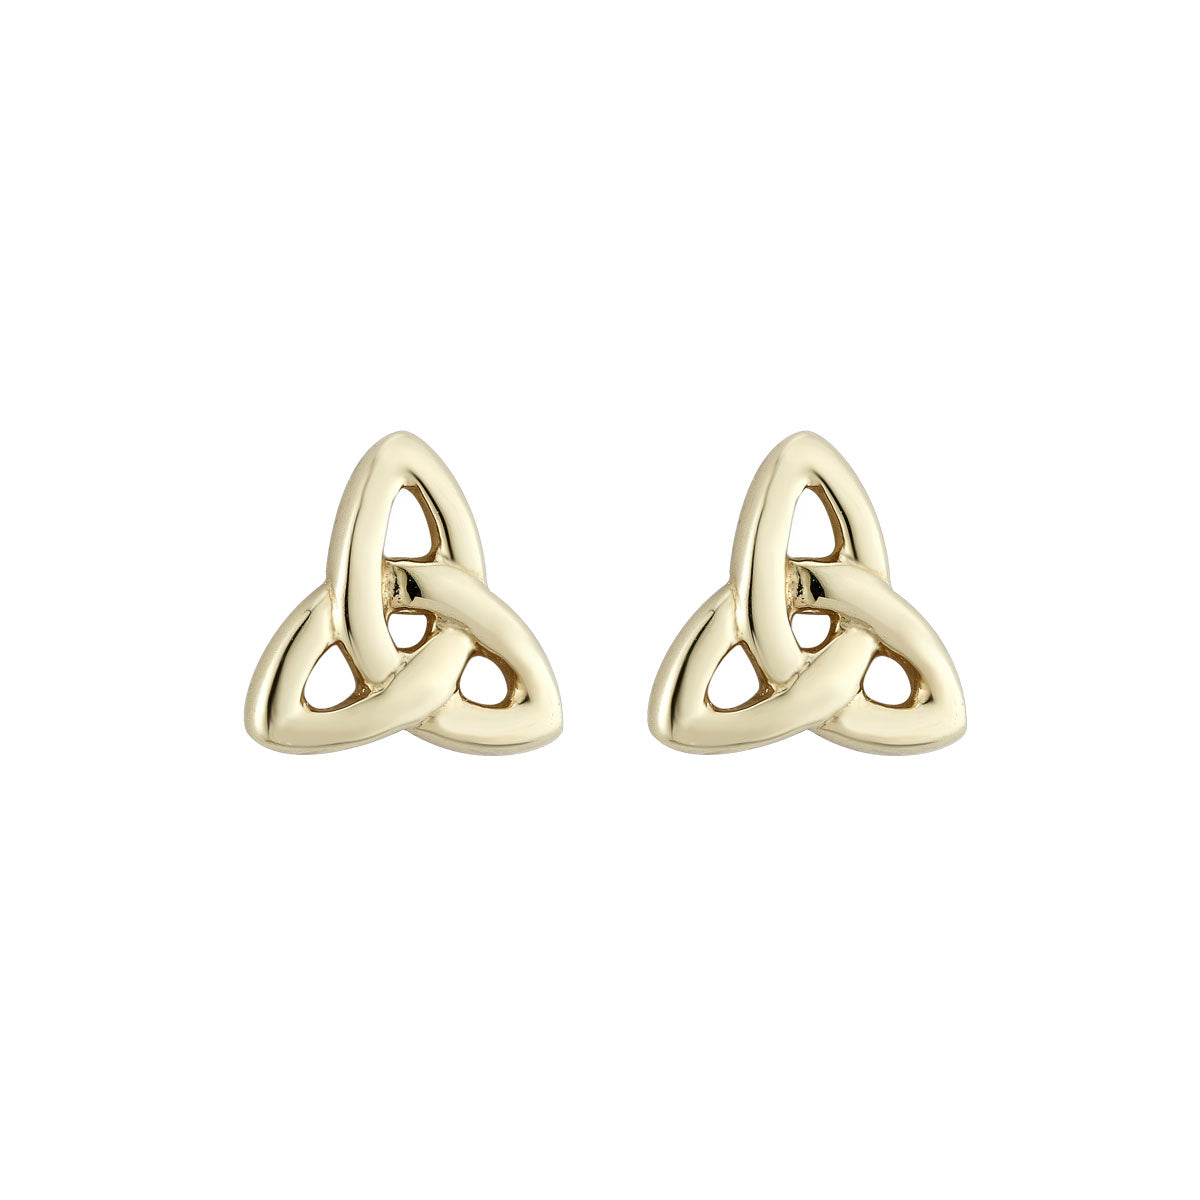 14K gold small trinity knot stud earrings s3077 from Solvar